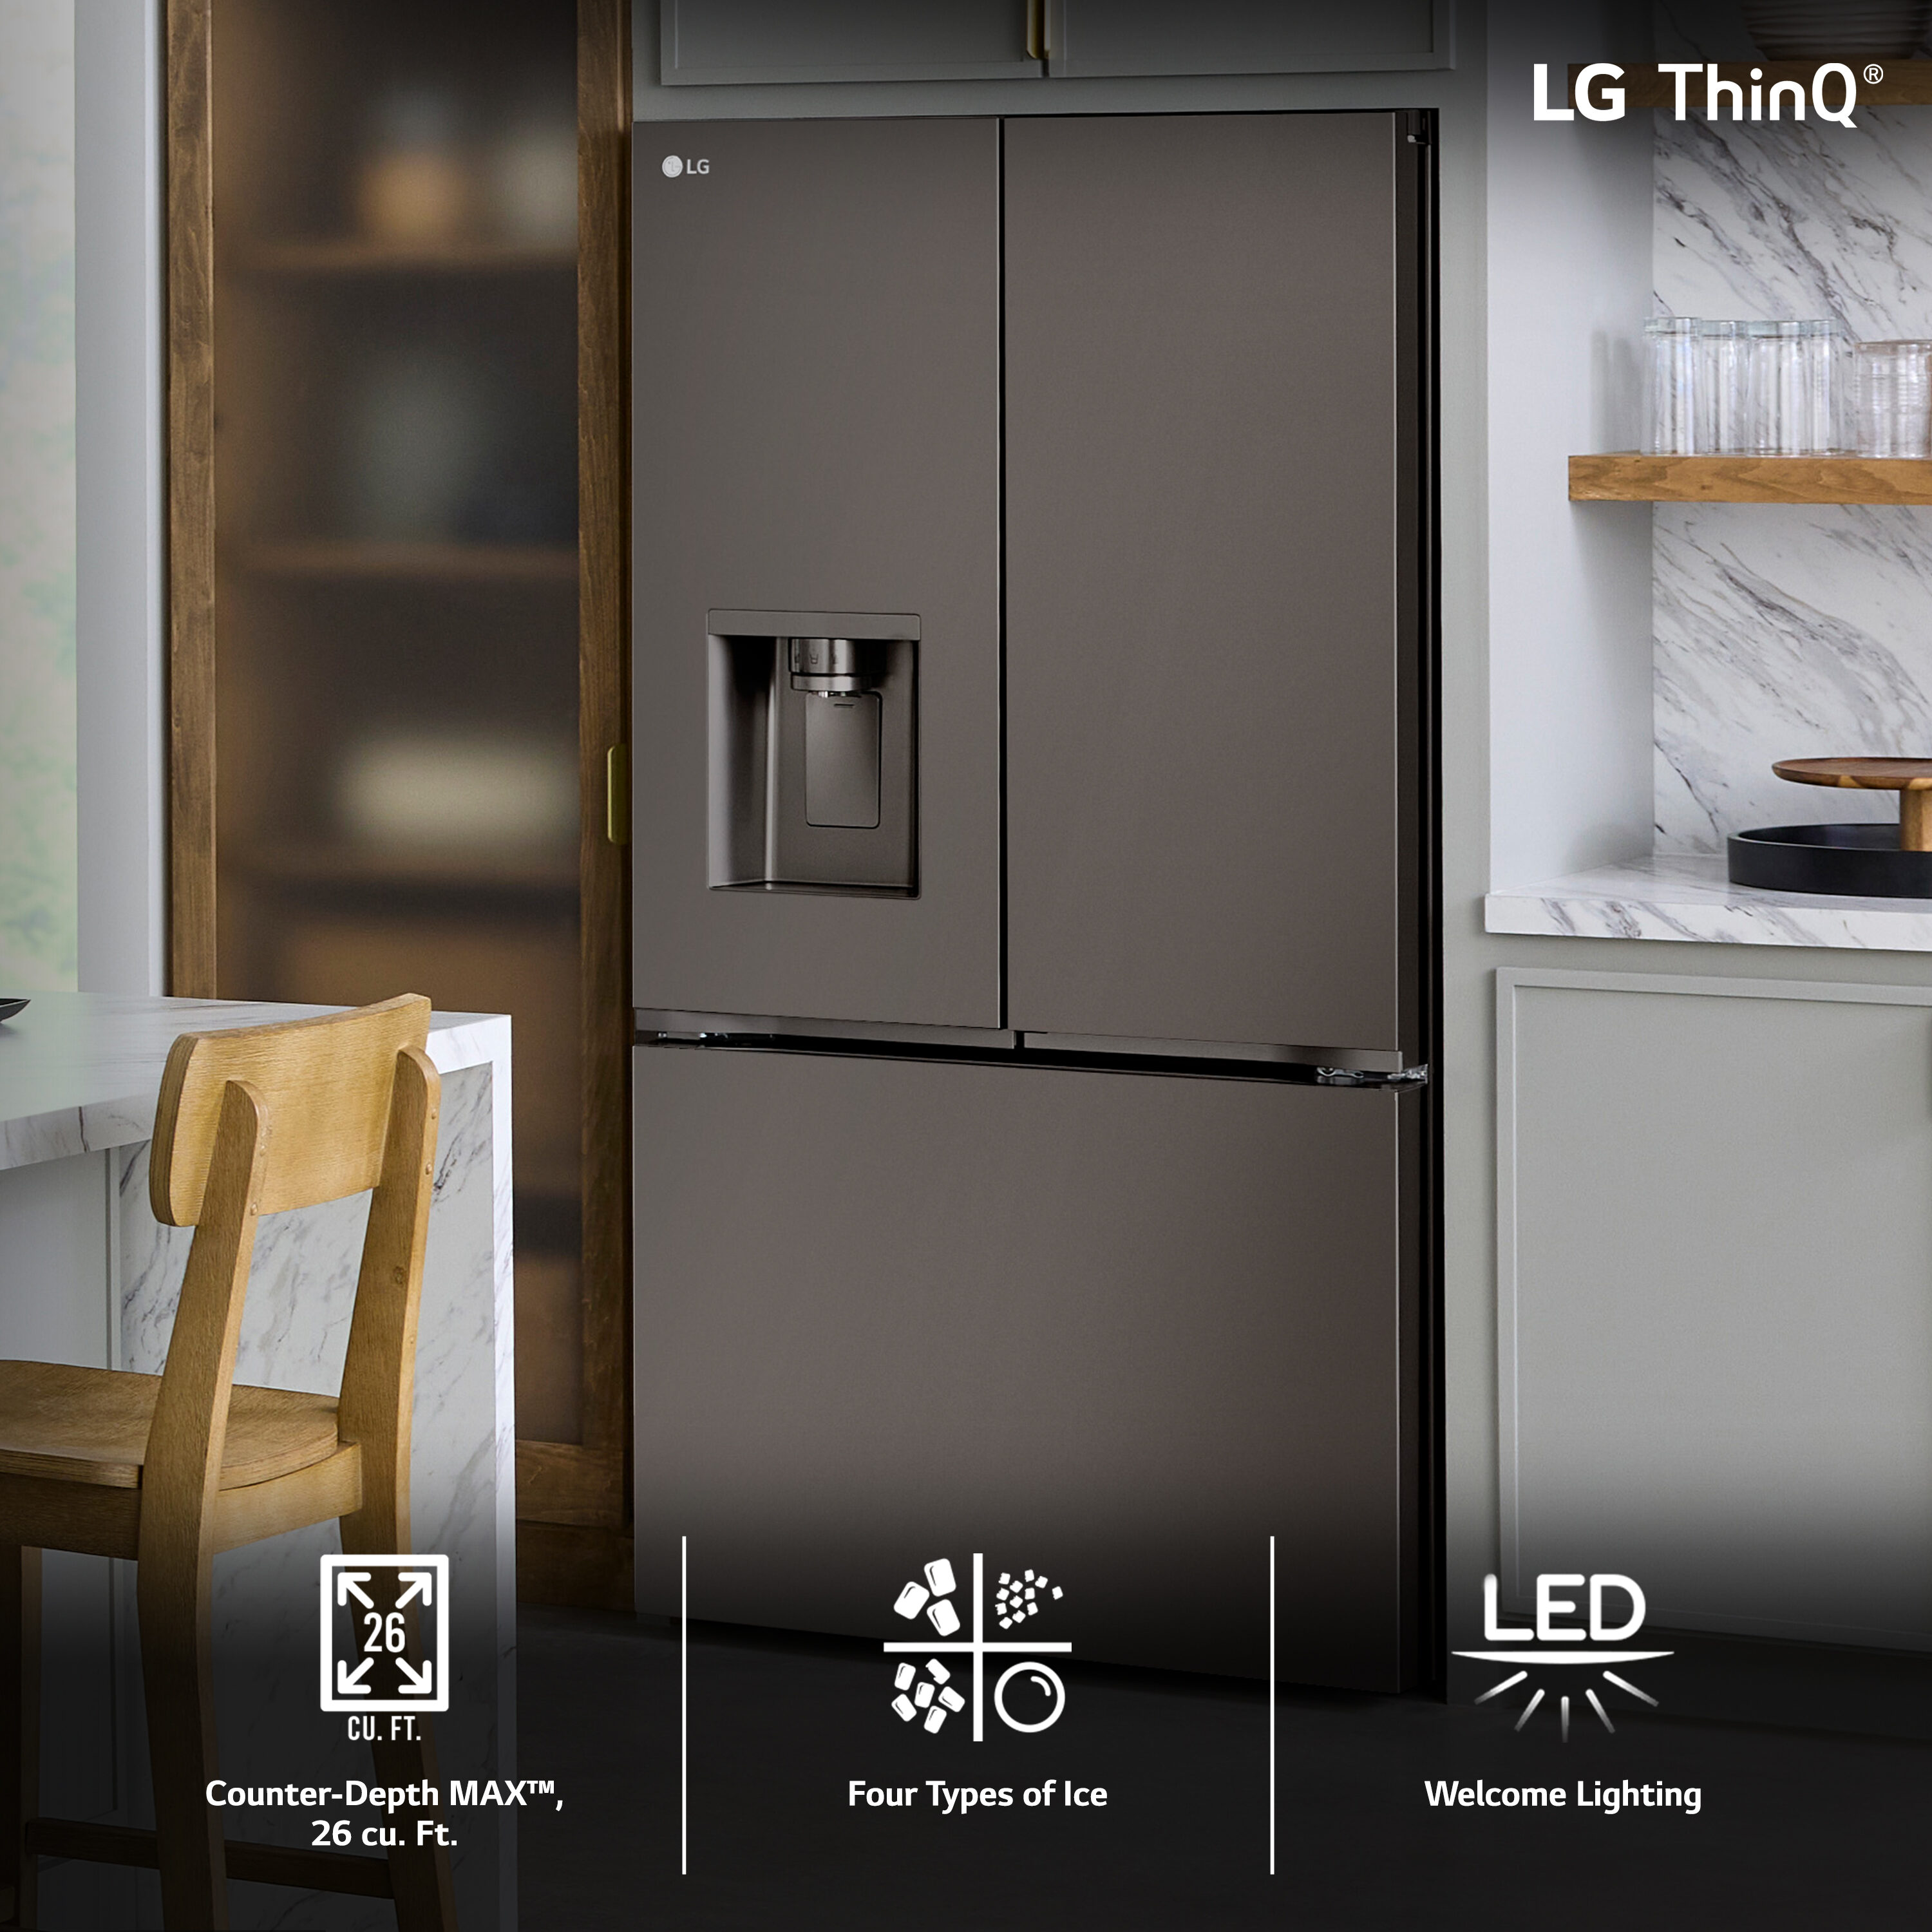 LG French Door Refrigerator - Appliance Max